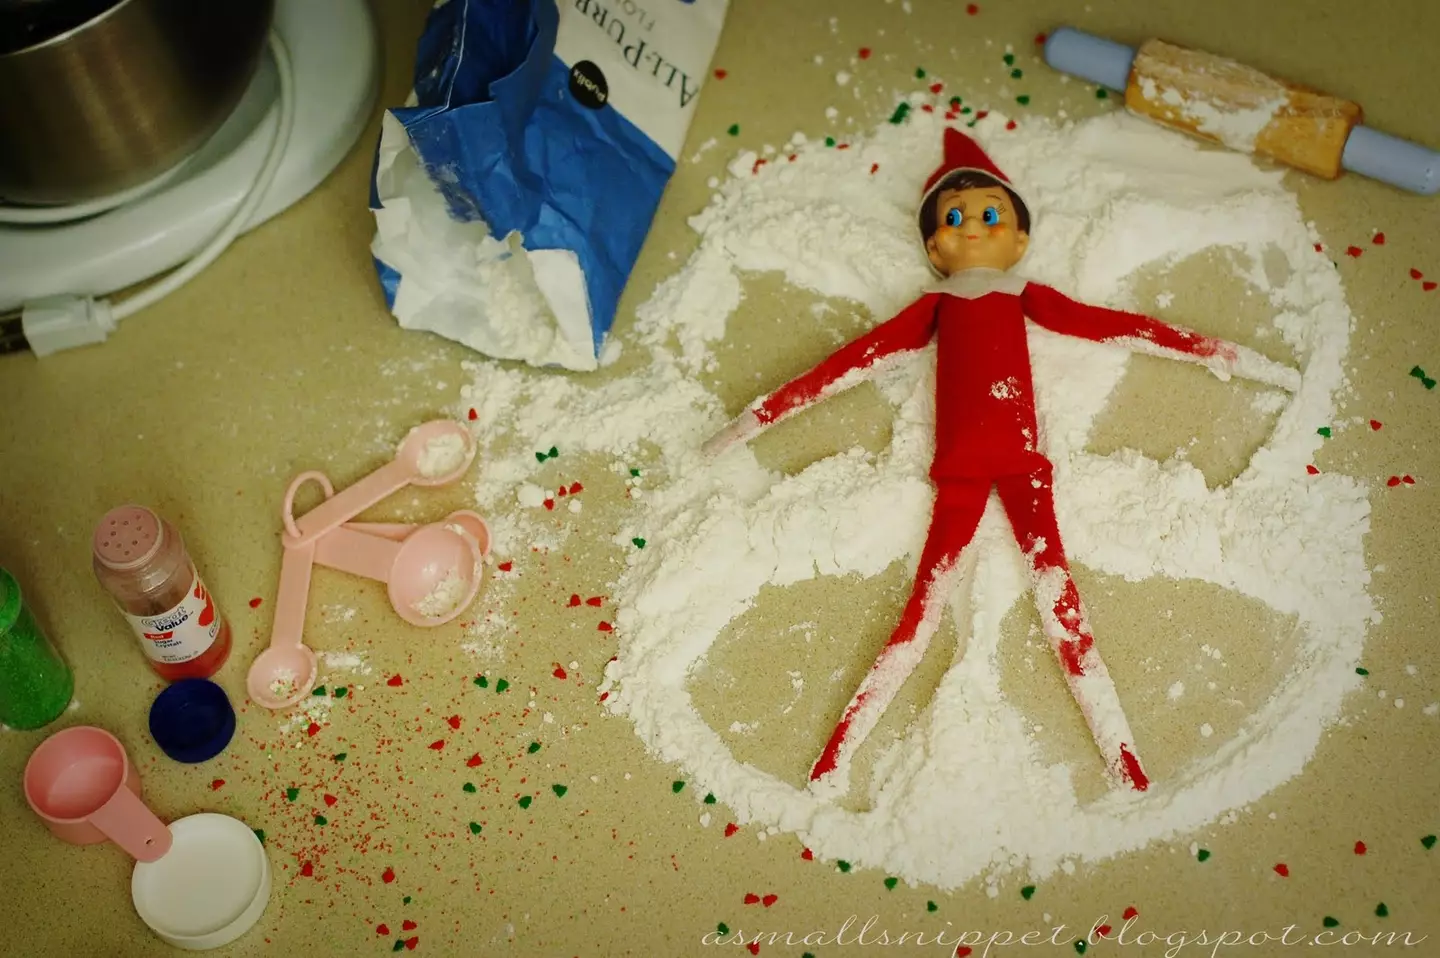 Elf making snow angels. (